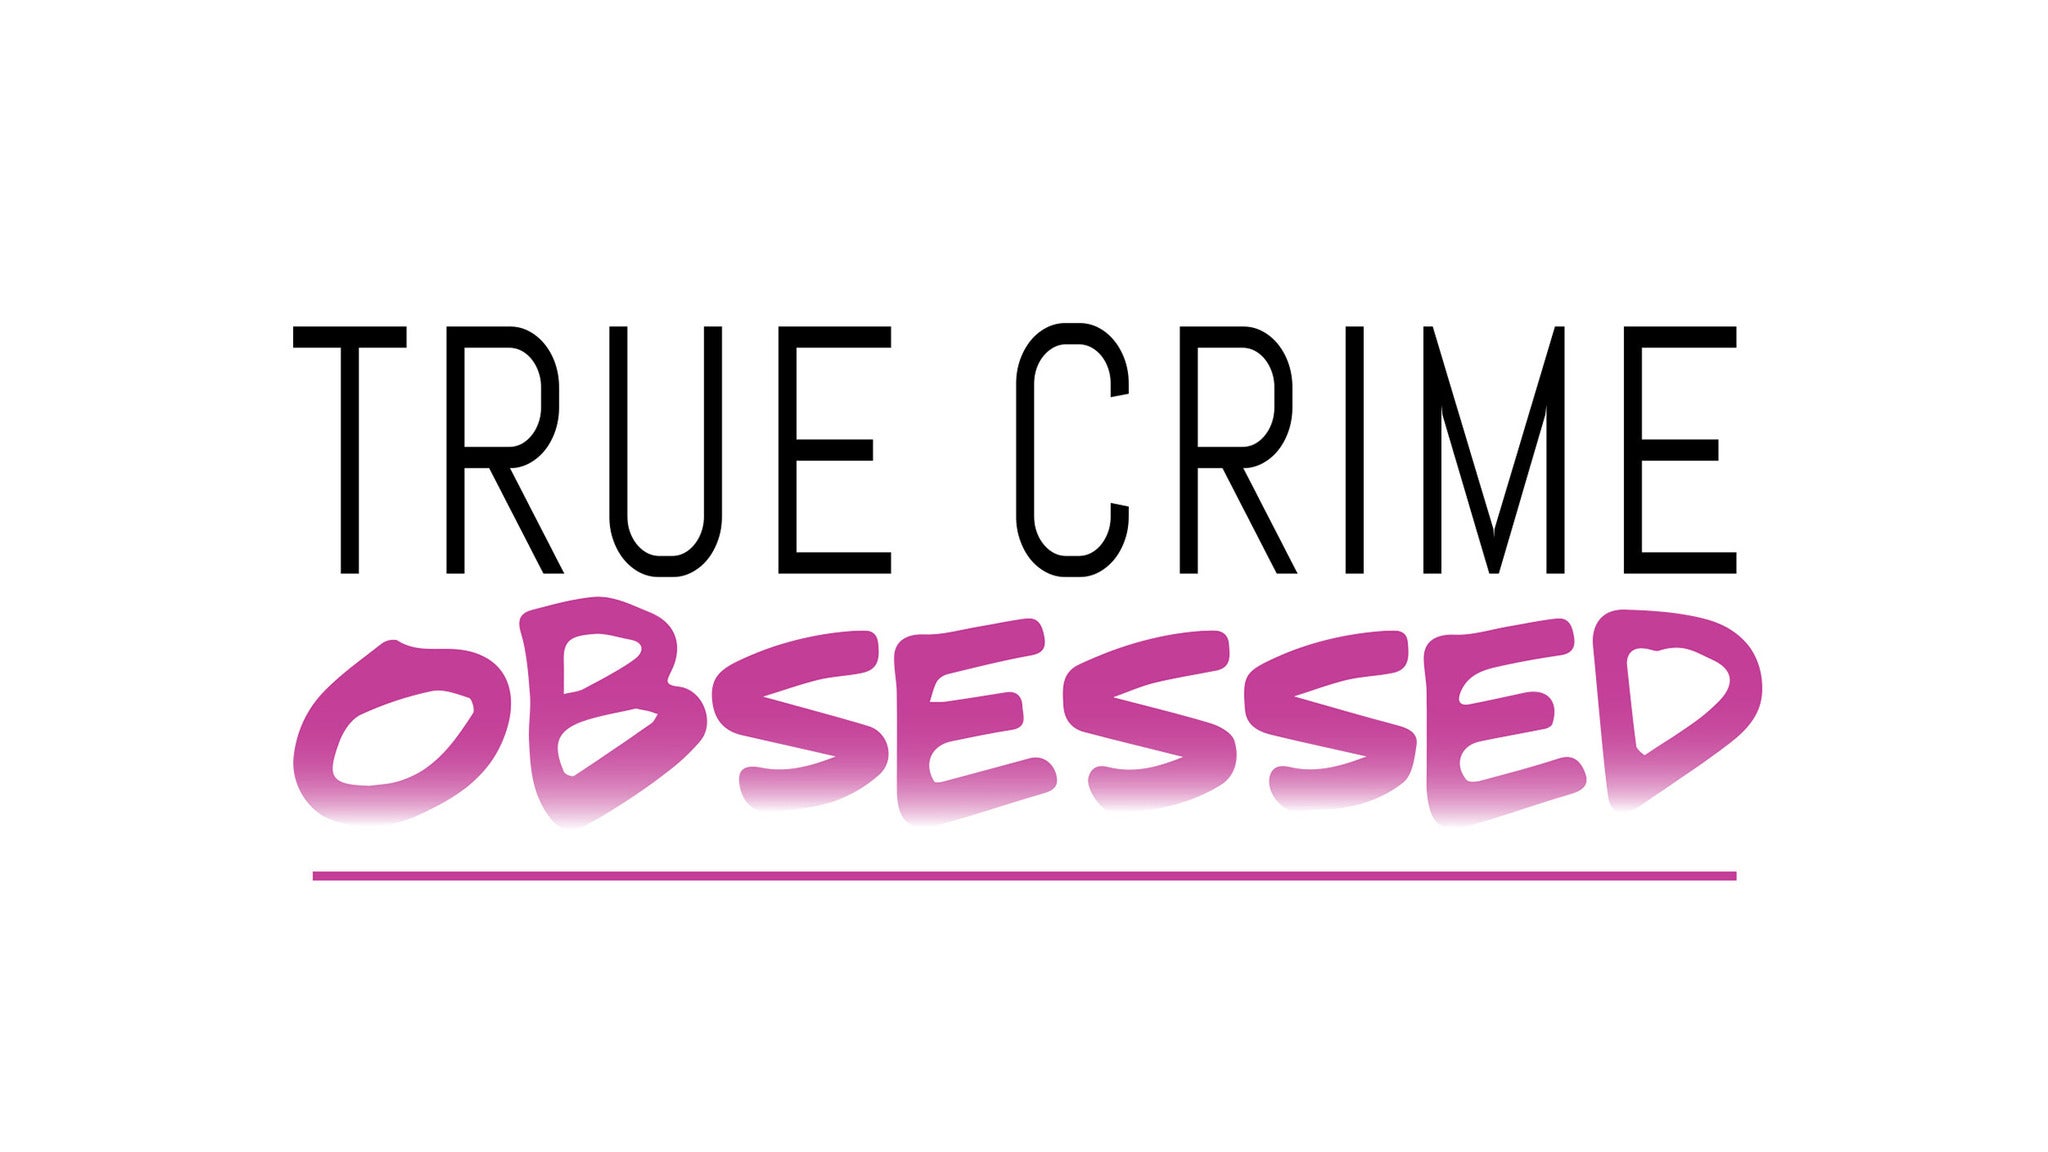 True Crime Obsessed Live! in Los Angeles promo photo for Allegiant Summer's Live 4 Pack presale offer code